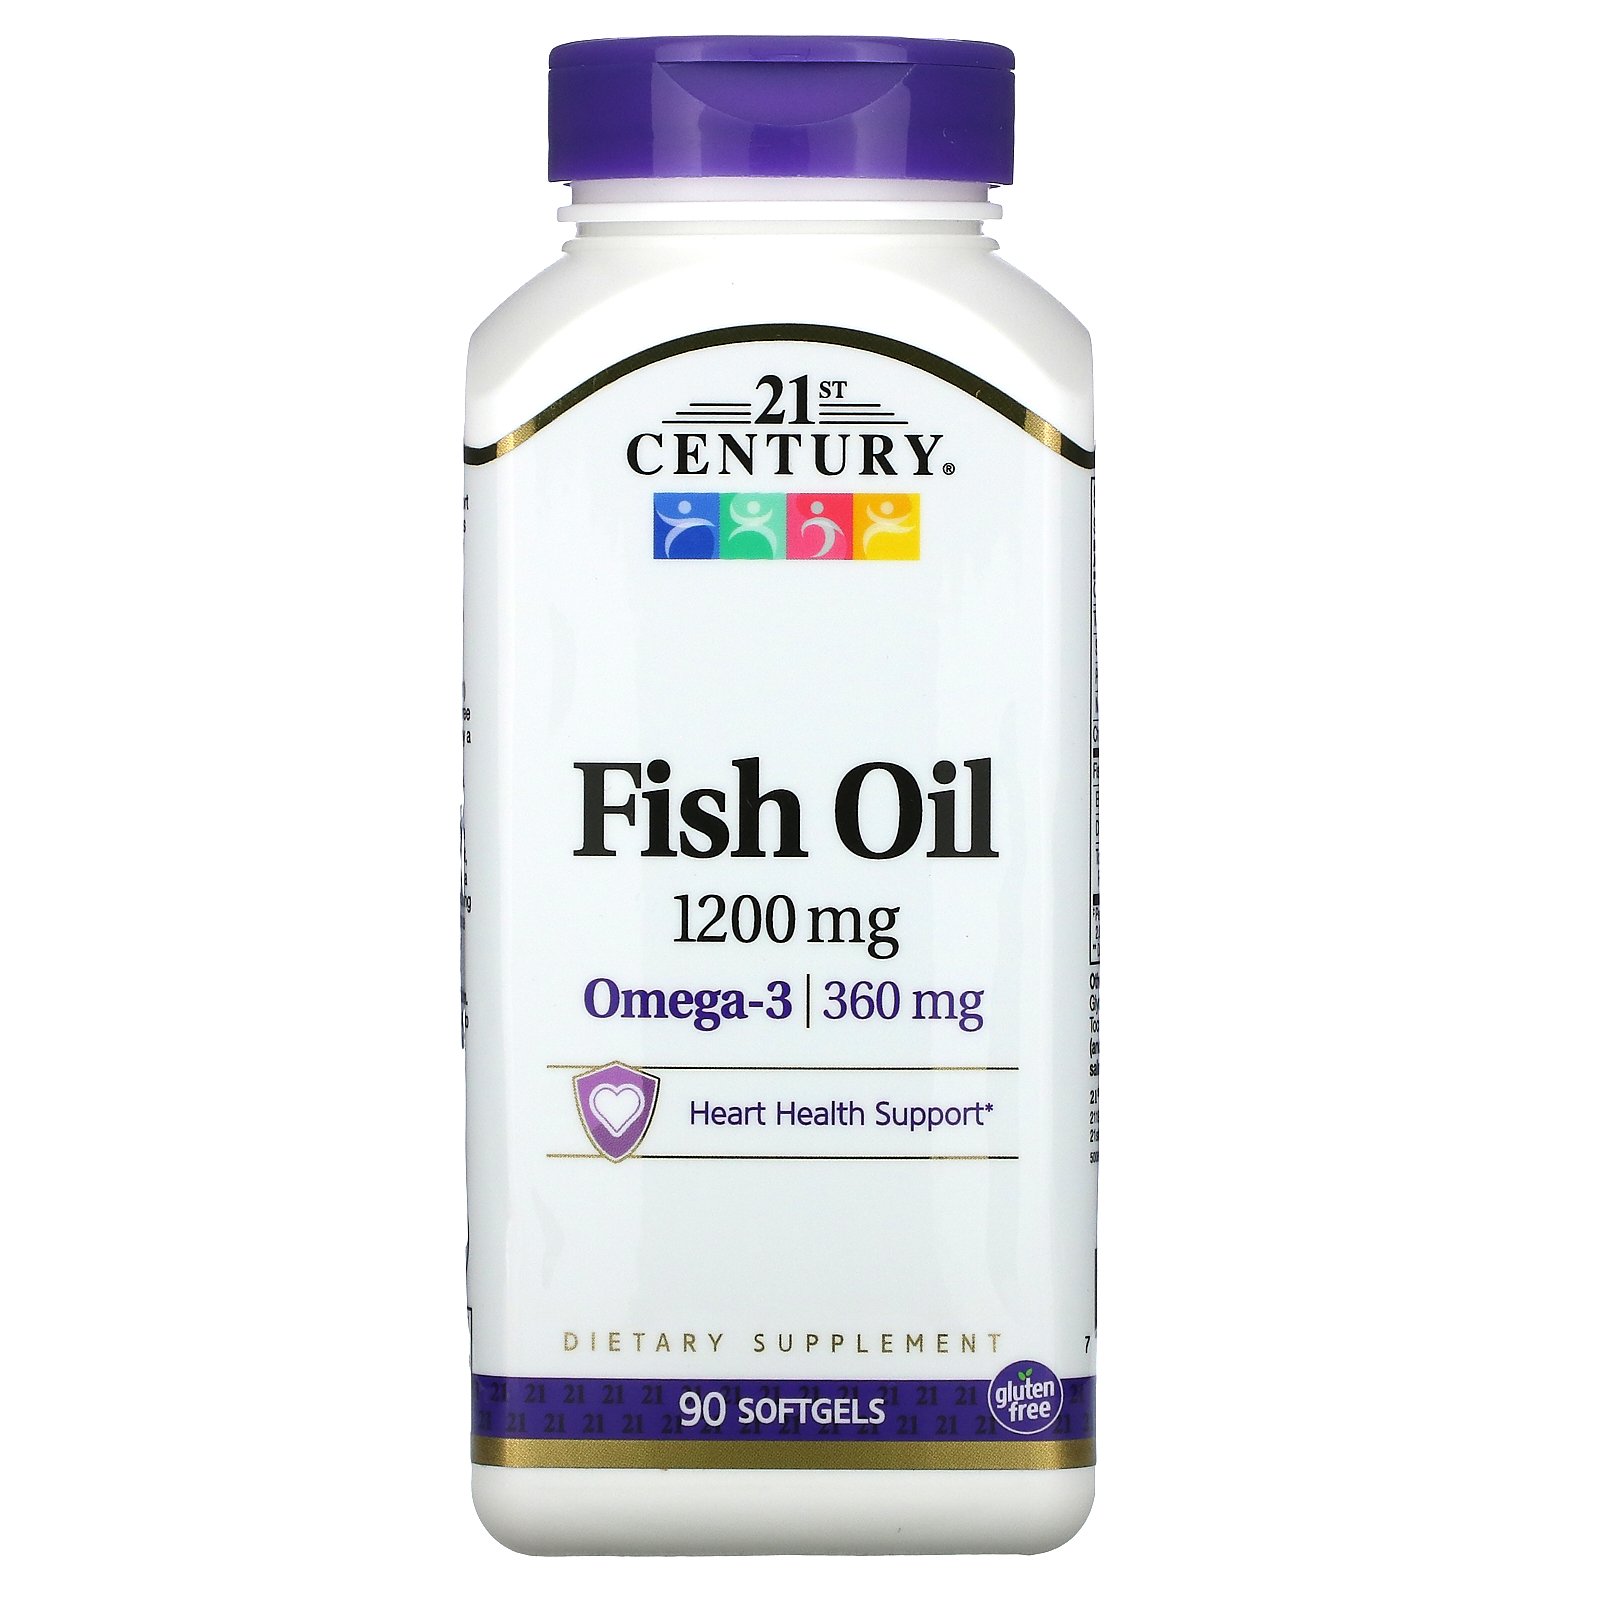 21st century fish oil